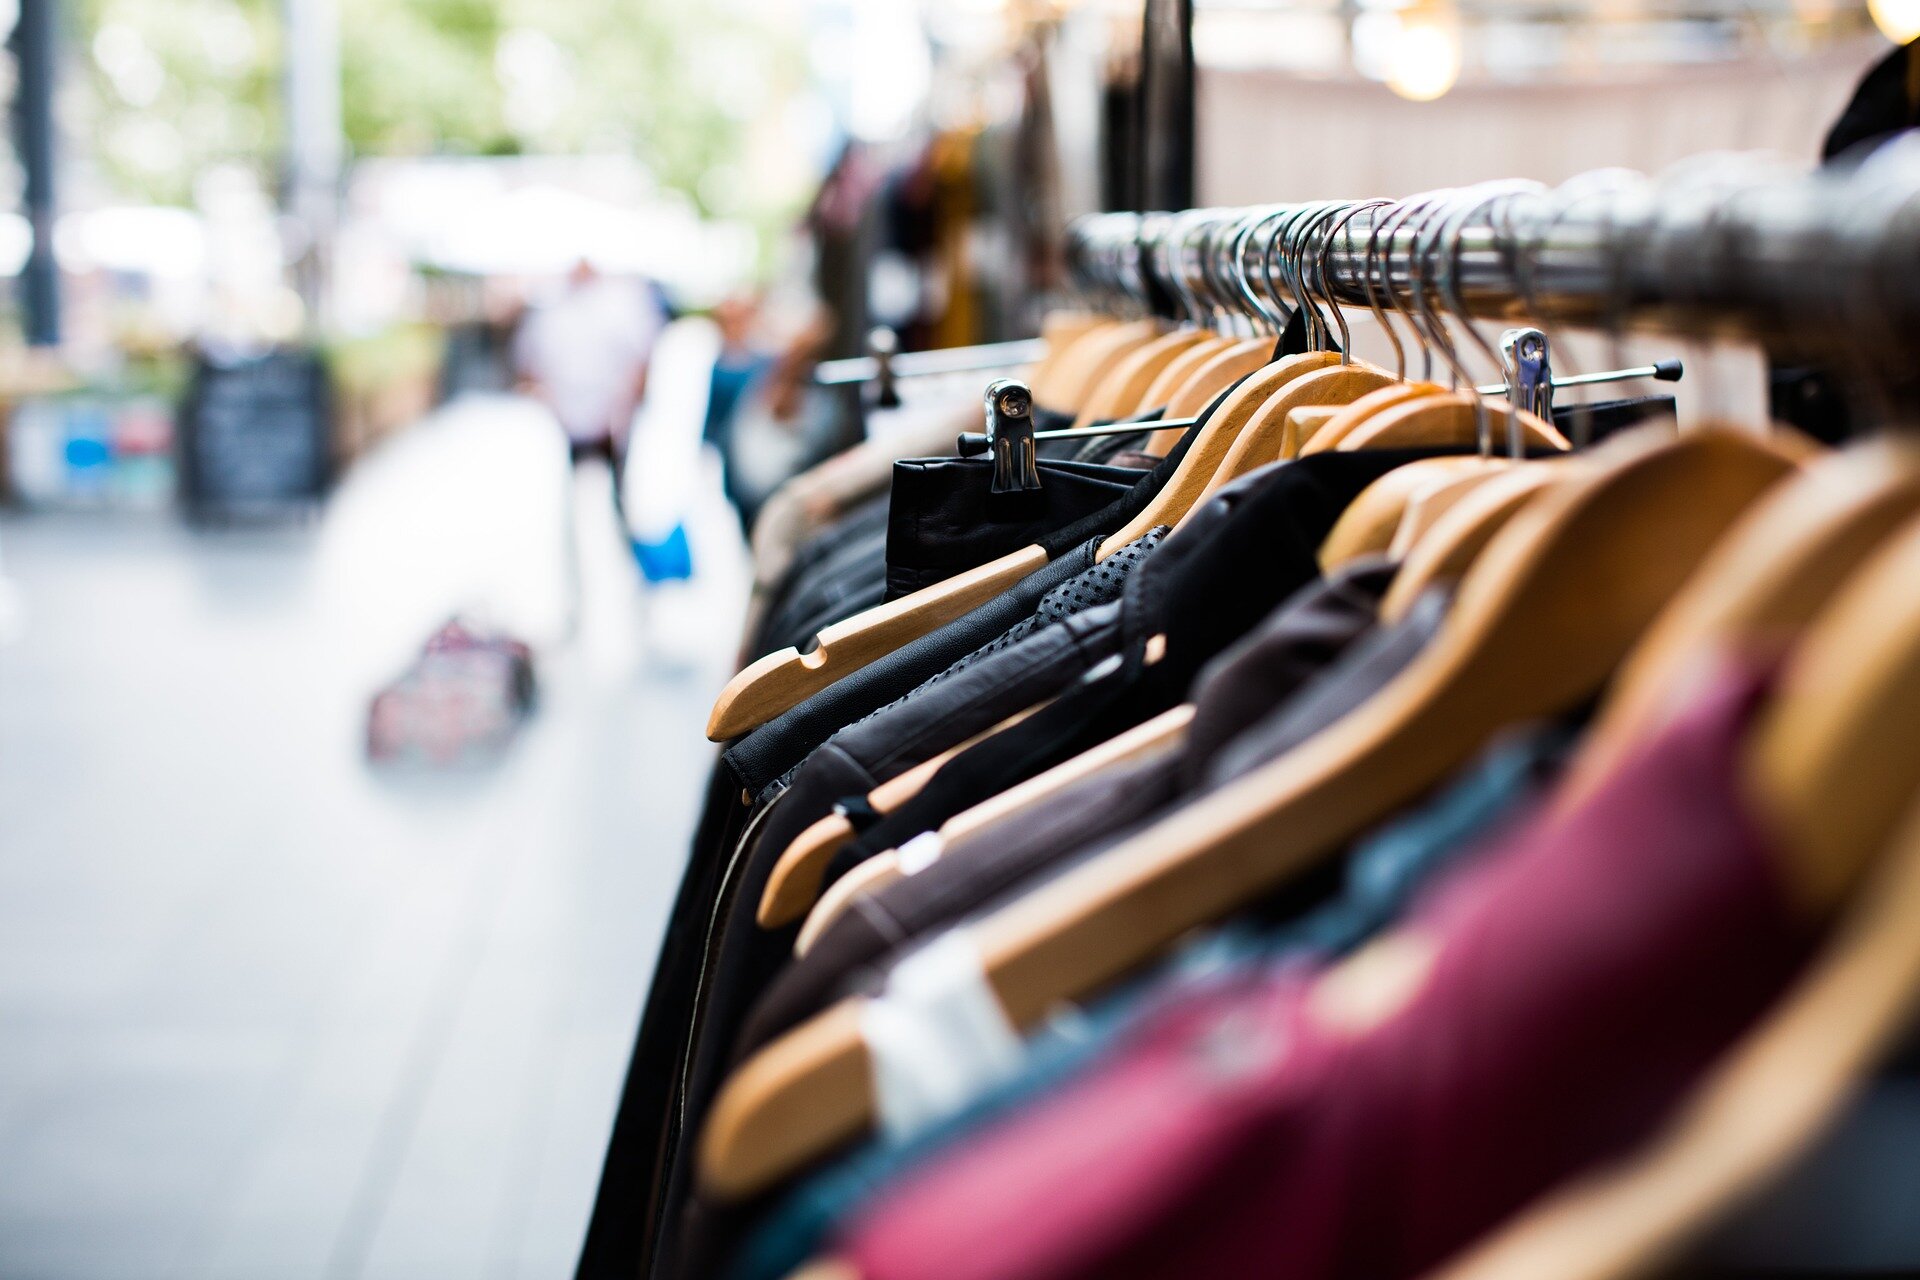 New study shapes understanding of adaptive clothing customer needs